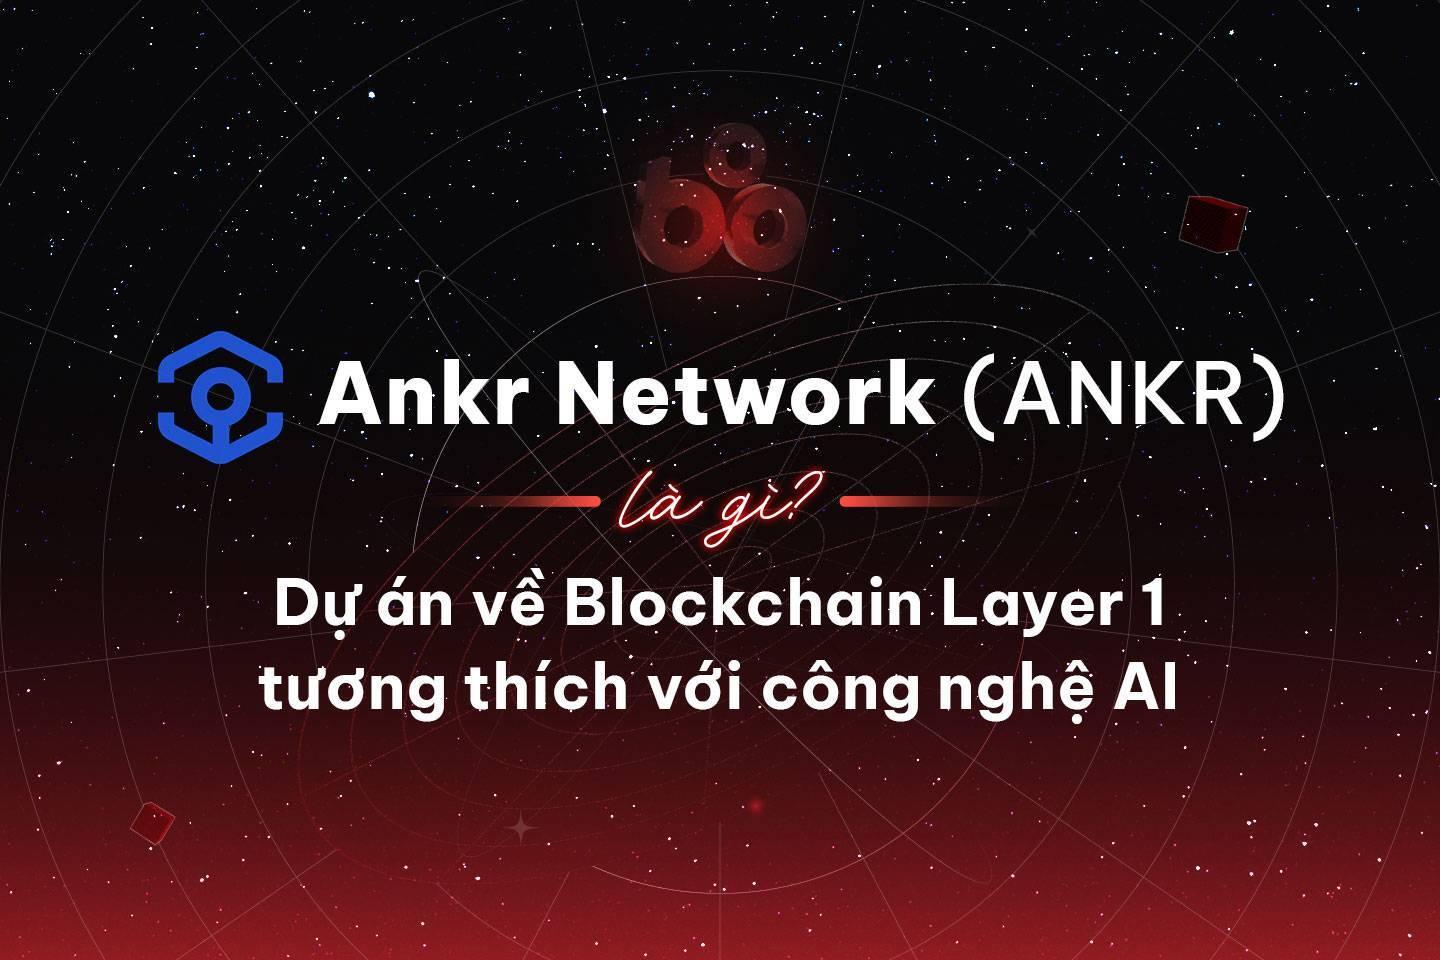 ankr-network-ankr-la-gi-du-an-ve-blockchain-layer-1-tuong-thich-voi-cong-nghe-ai